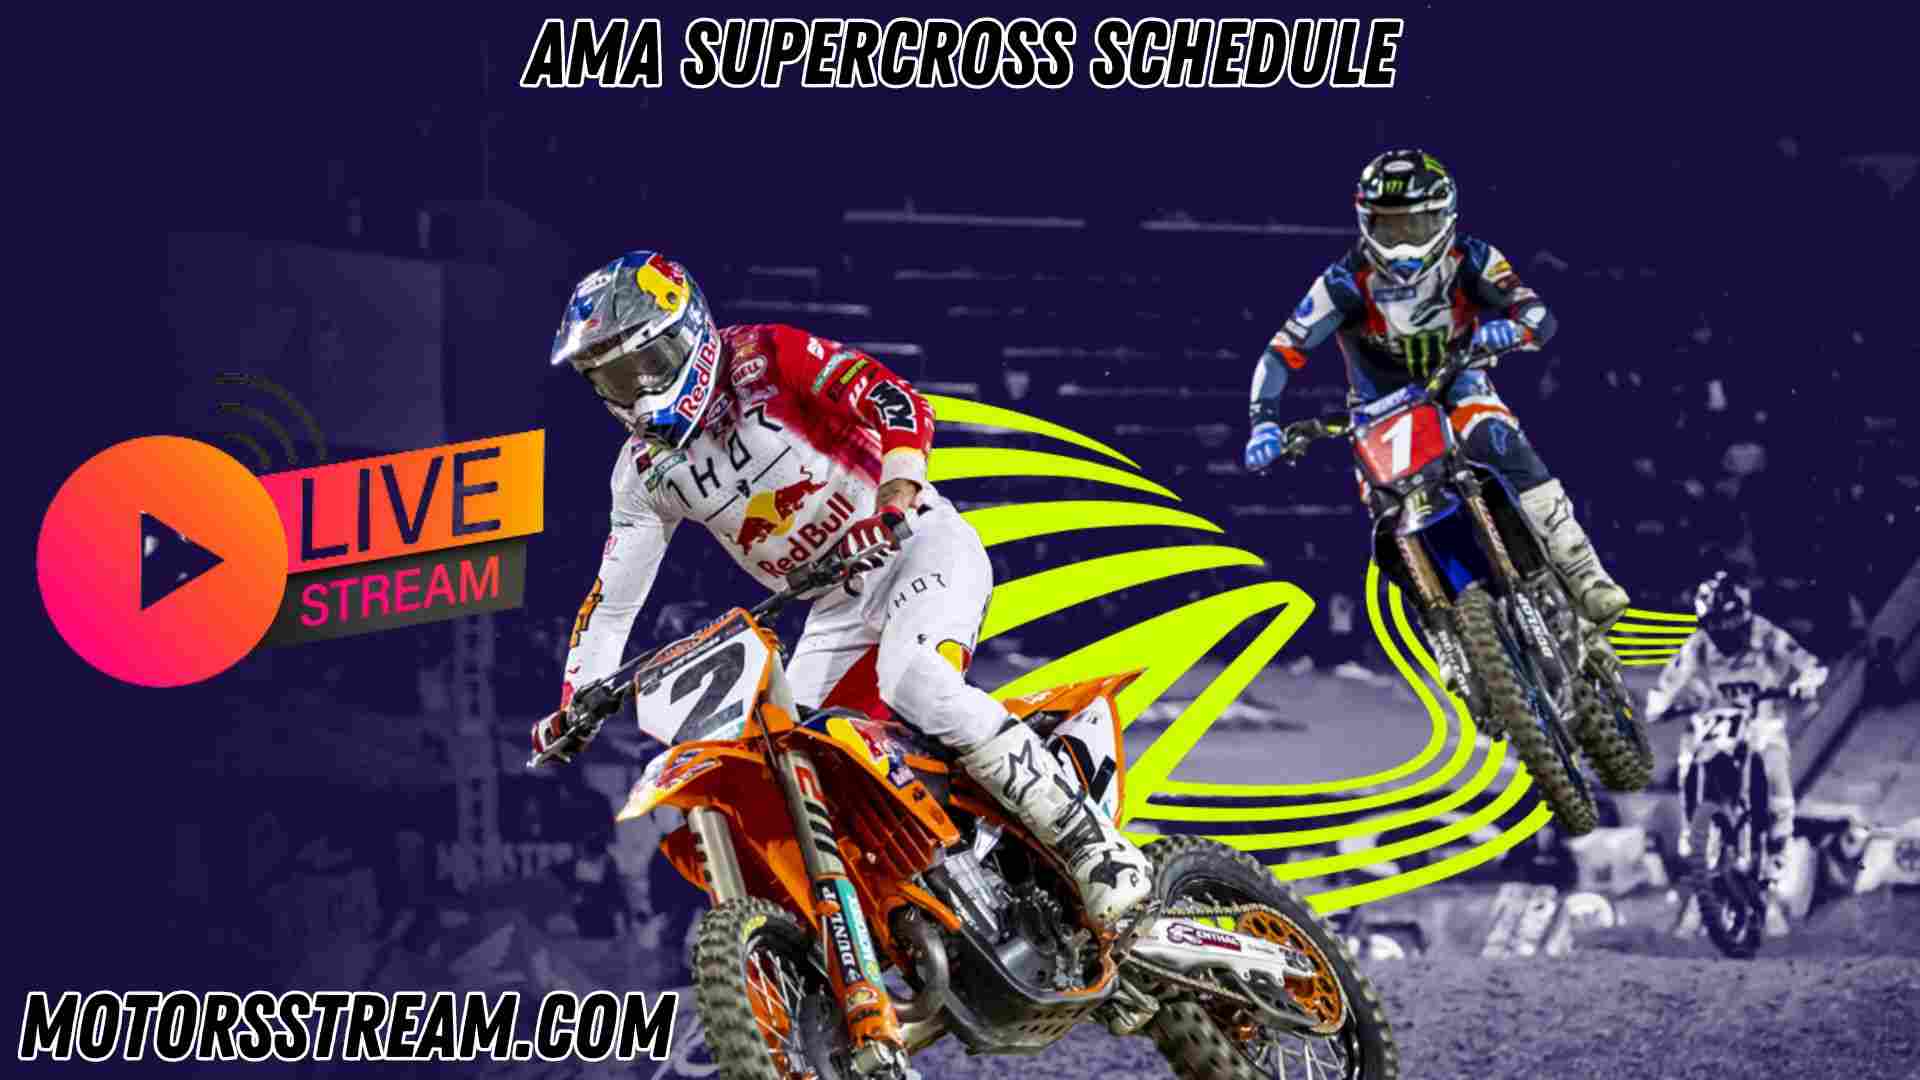 2019 Monster Energy AMA Supercross Schedule